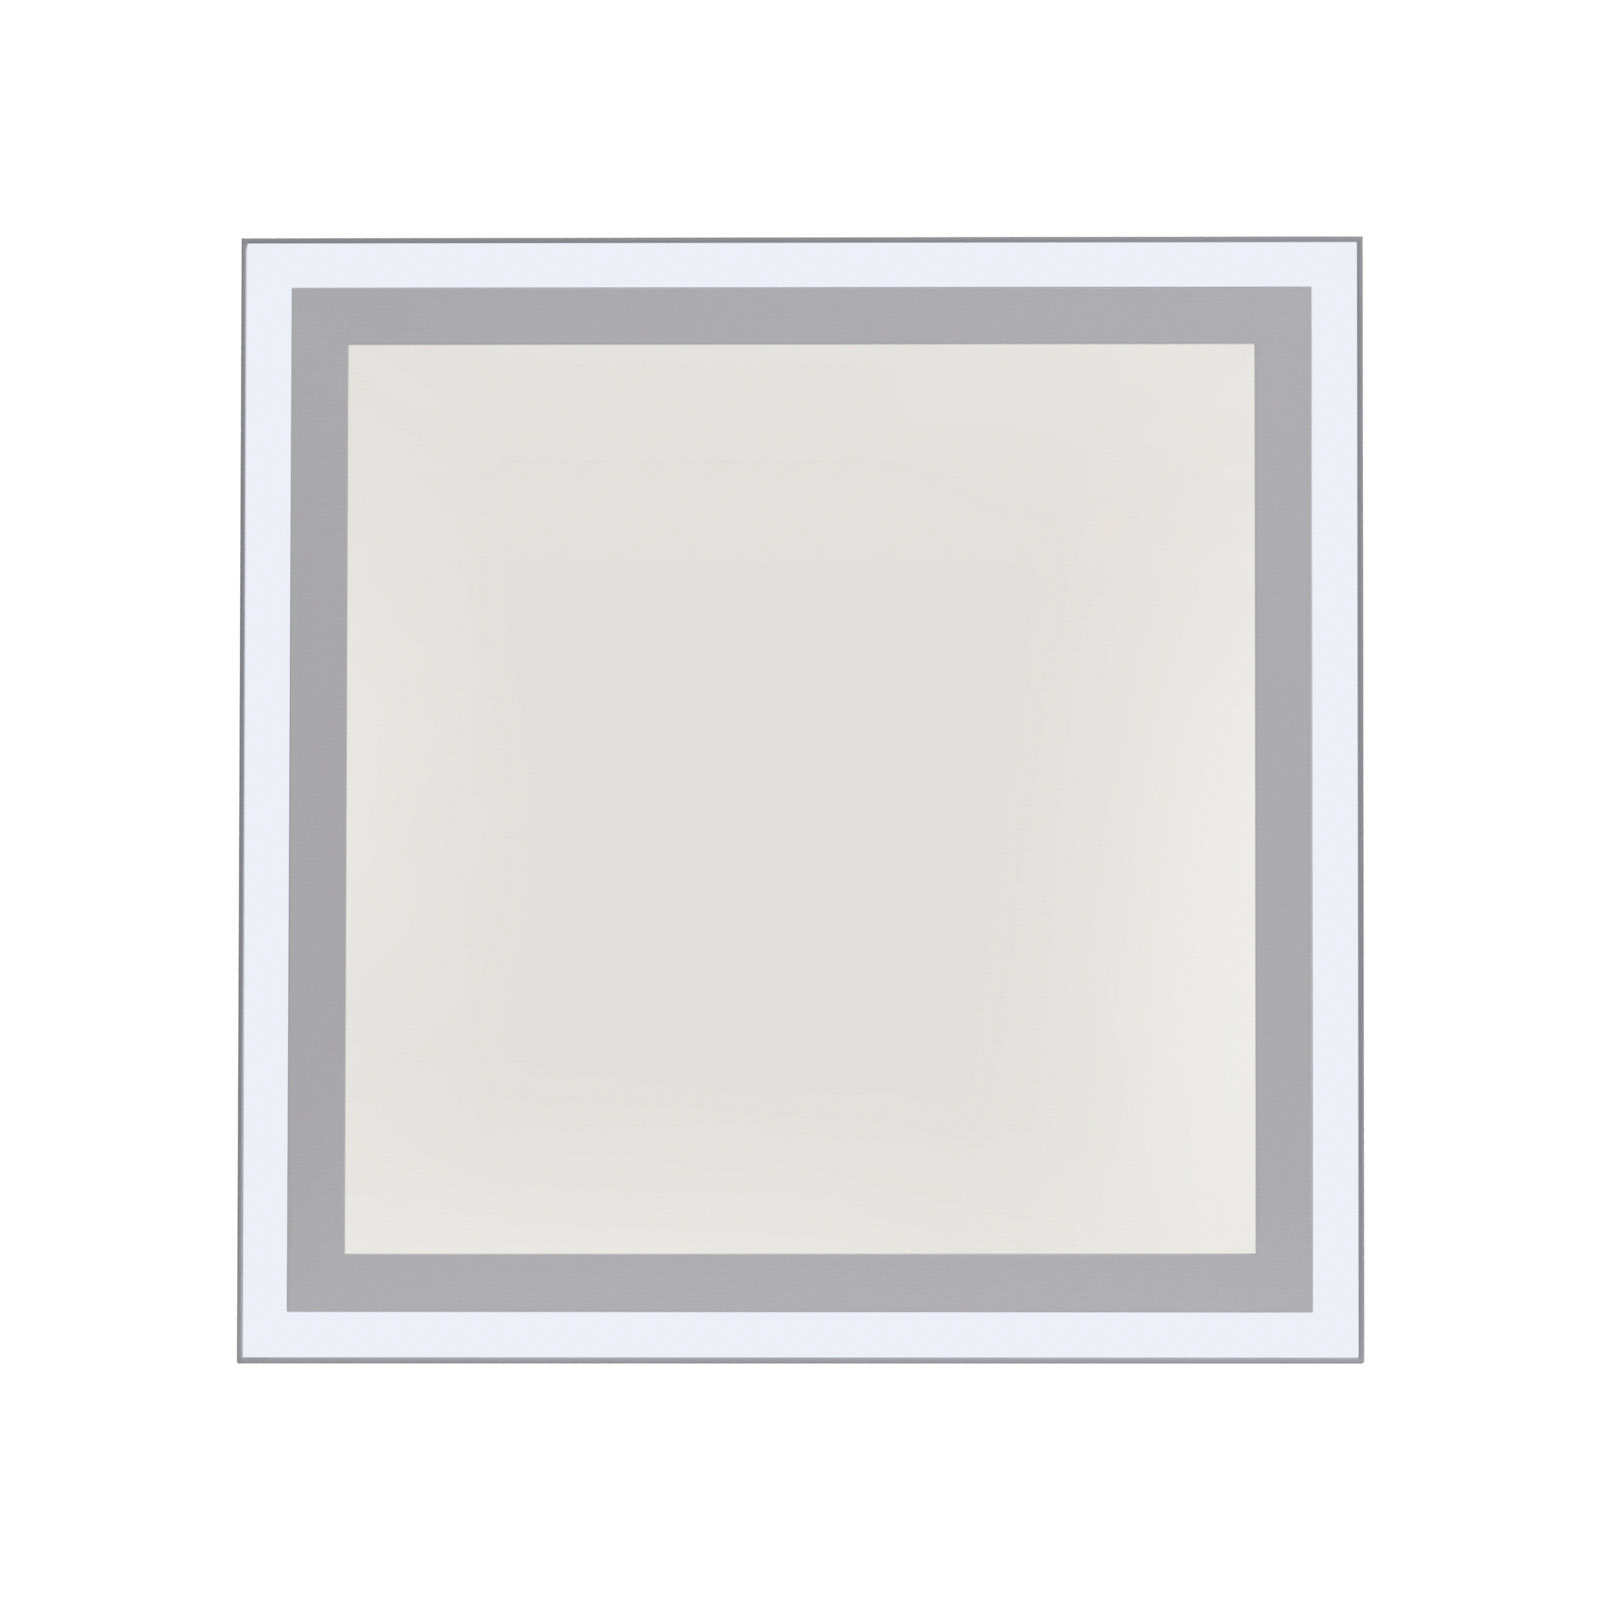 LED plafondlamp Edging, tunable white, 31x31 cm